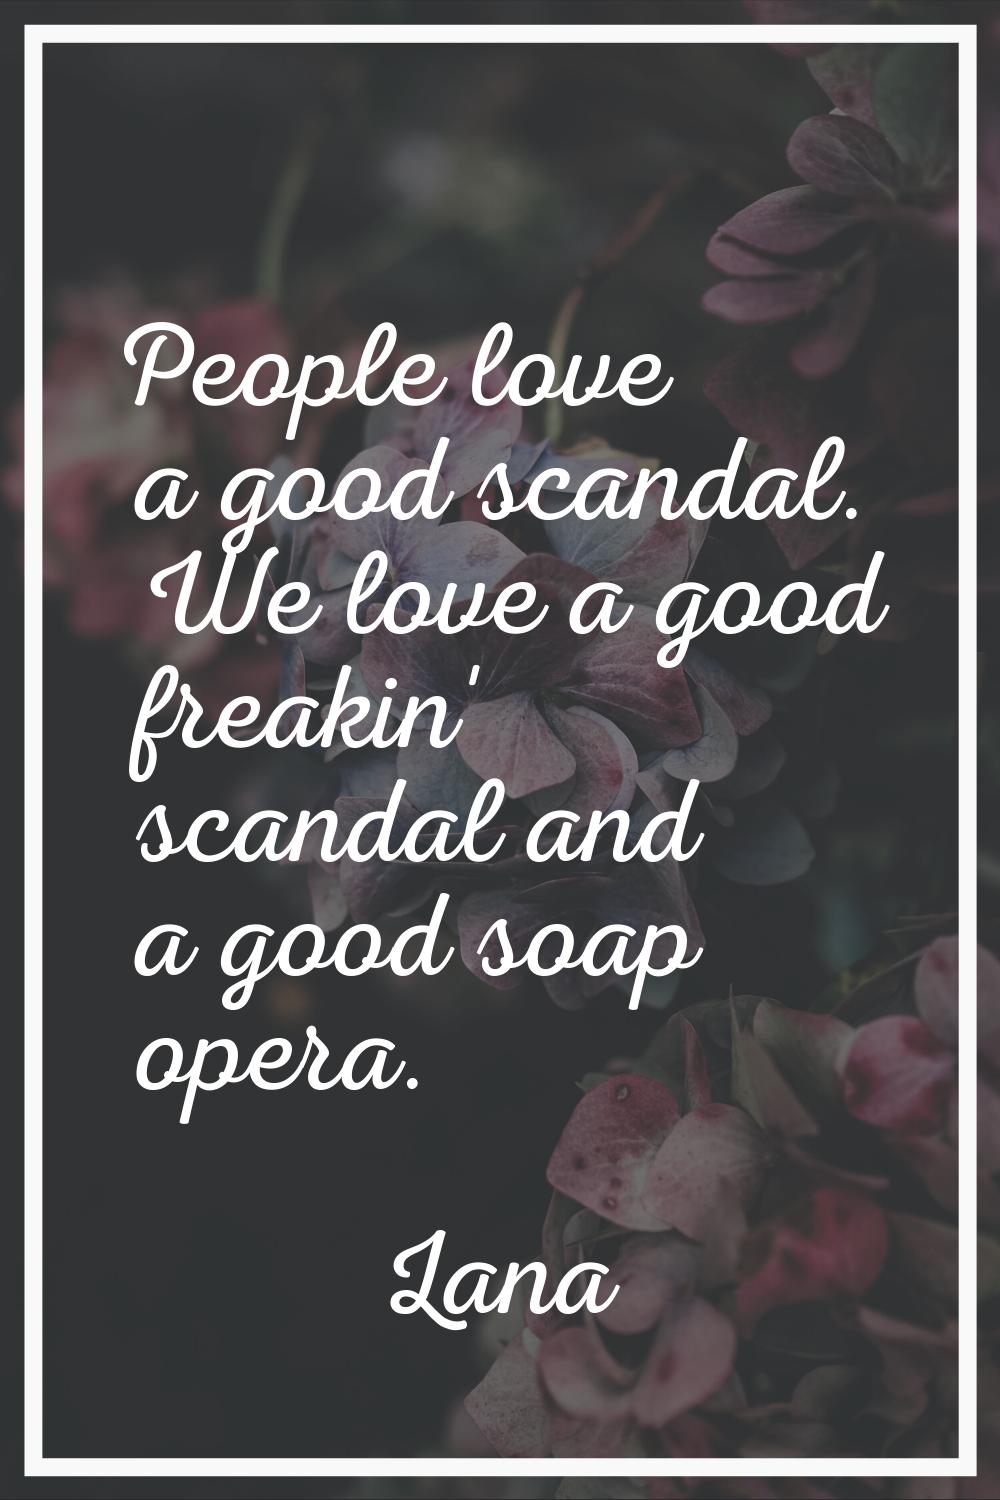 People love a good scandal. We love a good freakin' scandal and a good soap opera.